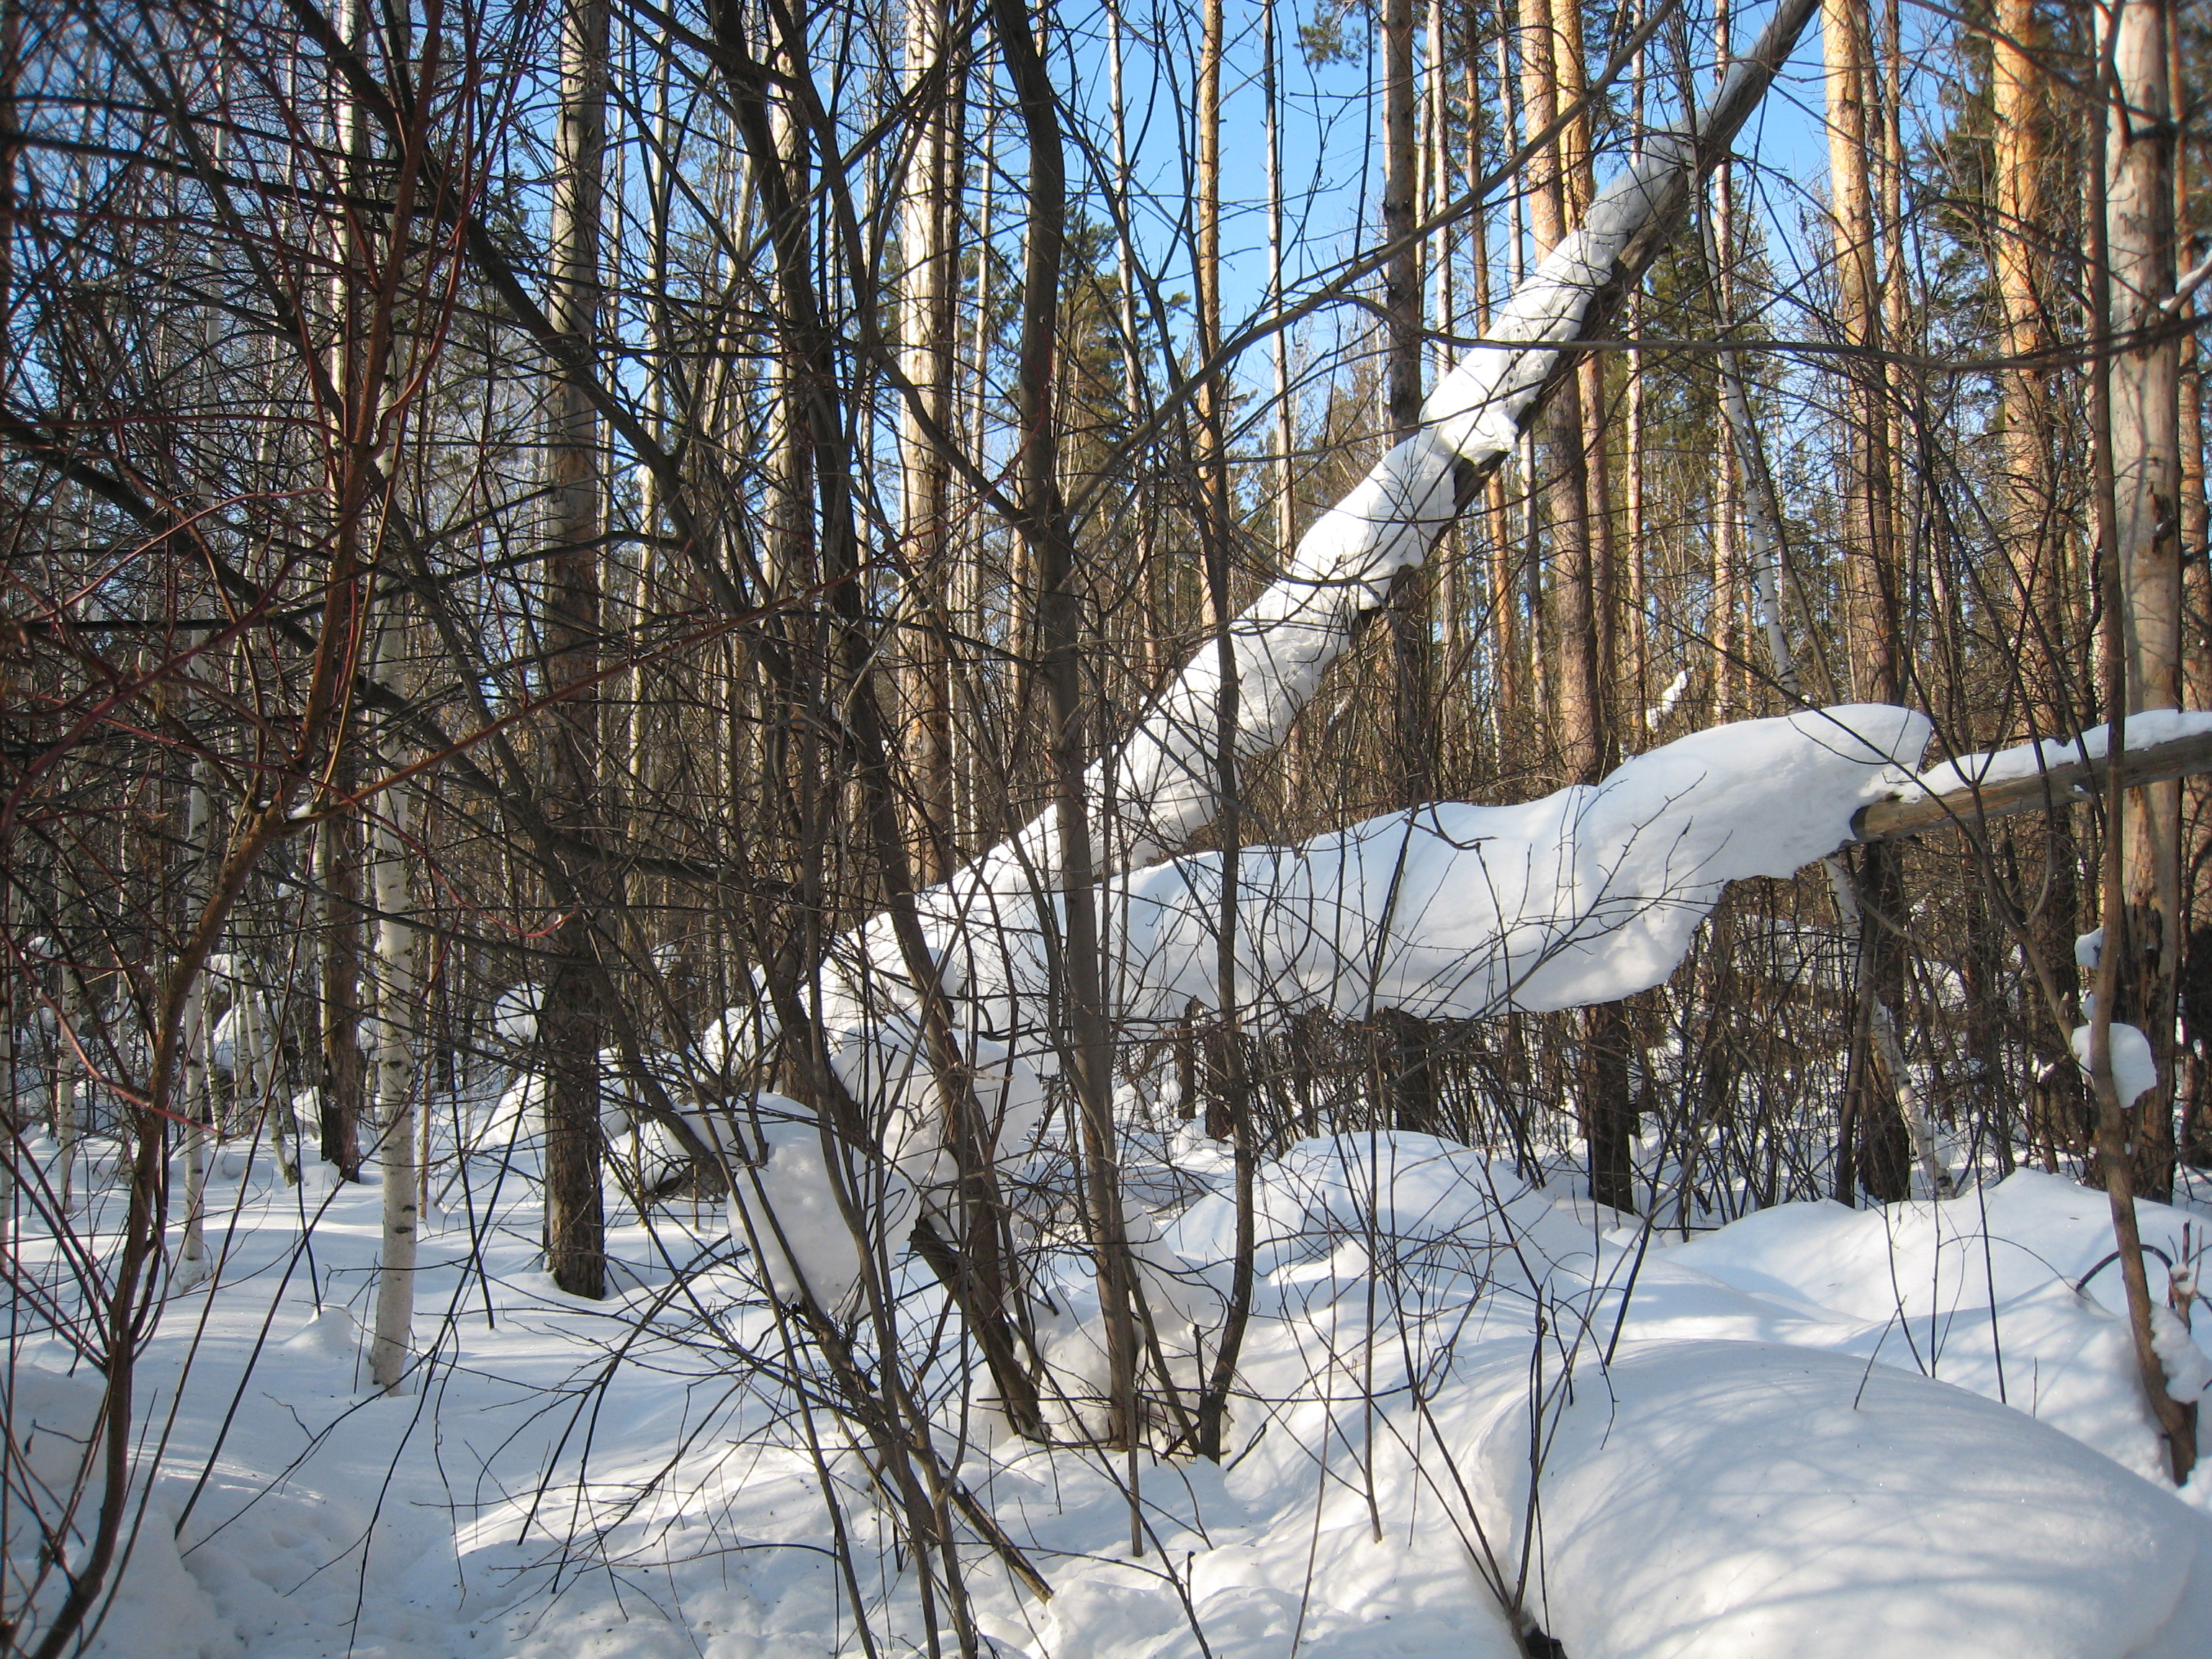 A tree under snow